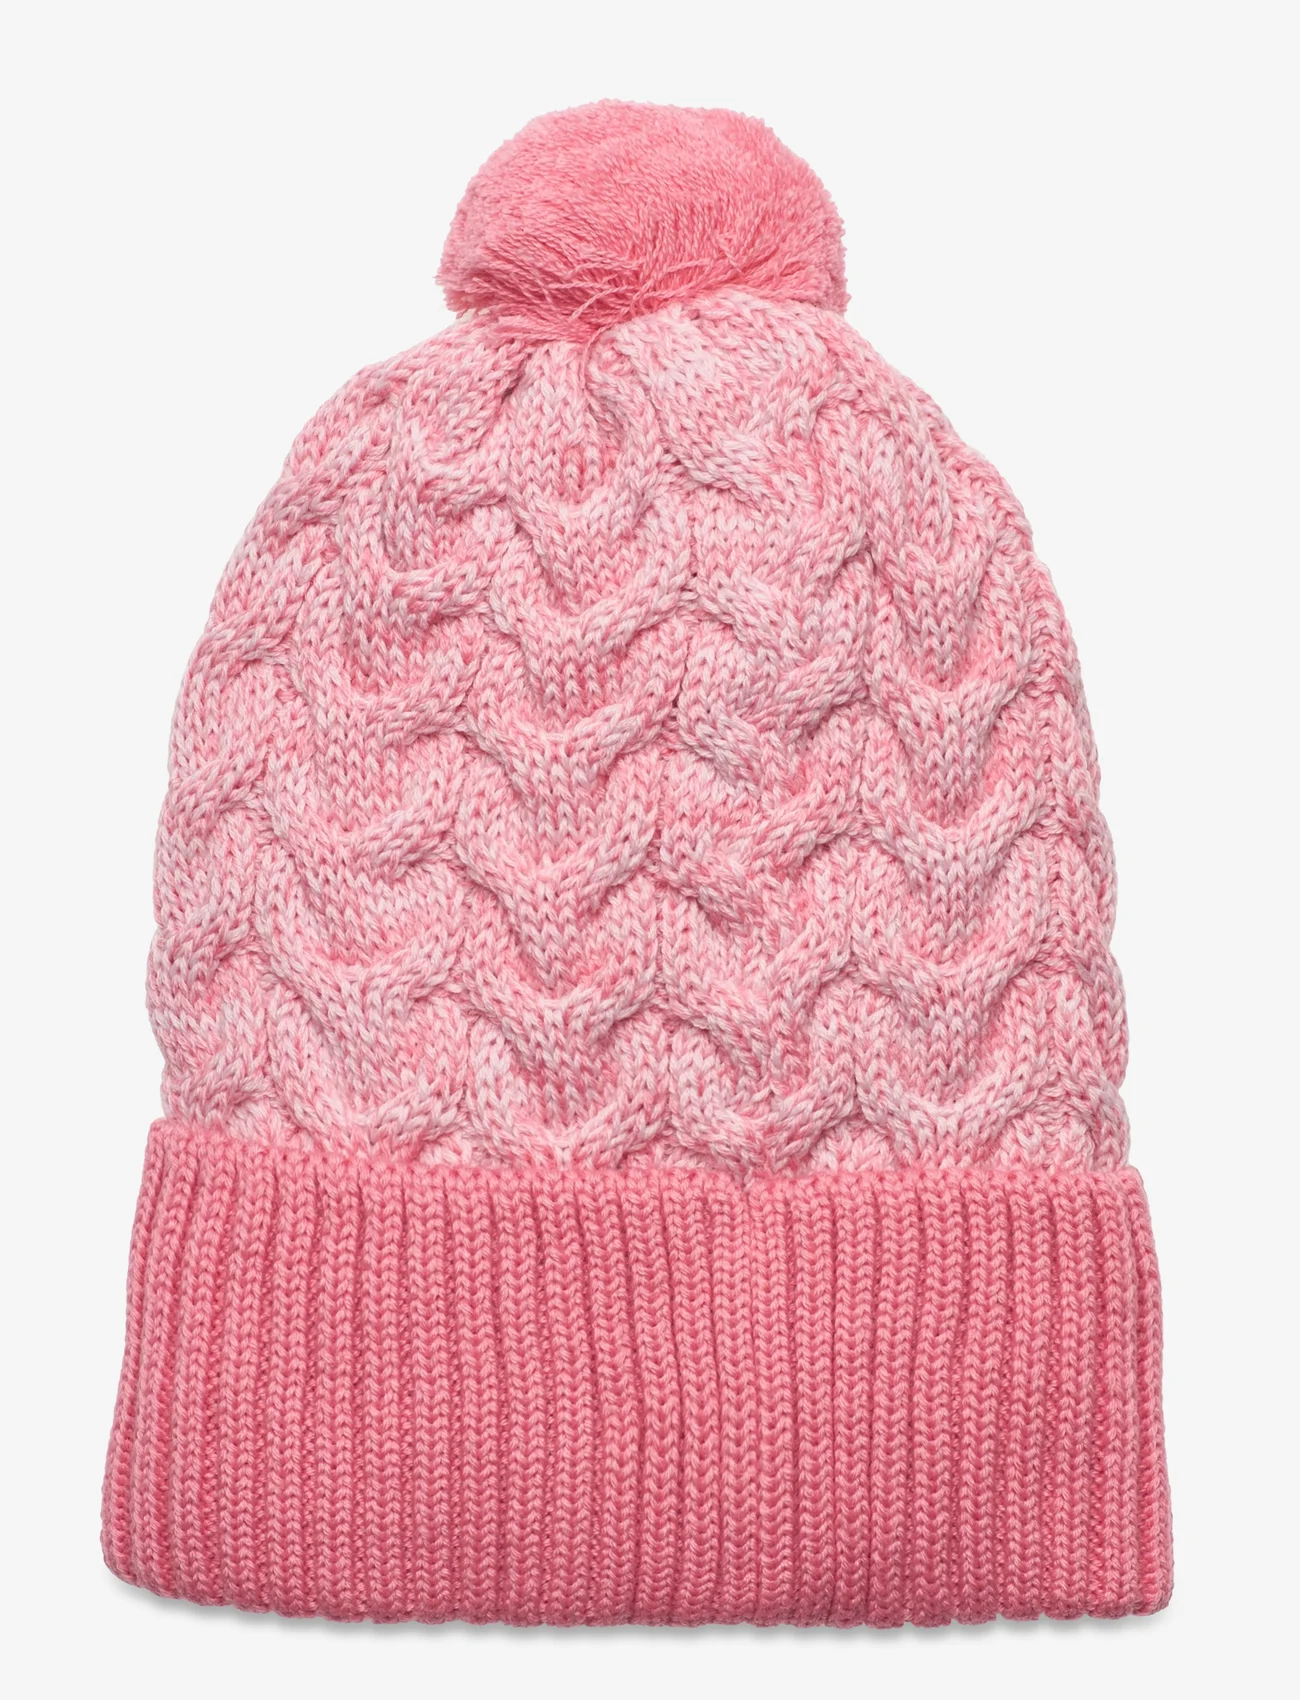 Reima - Beanie, Routii - winter hats - sunset pink - 1